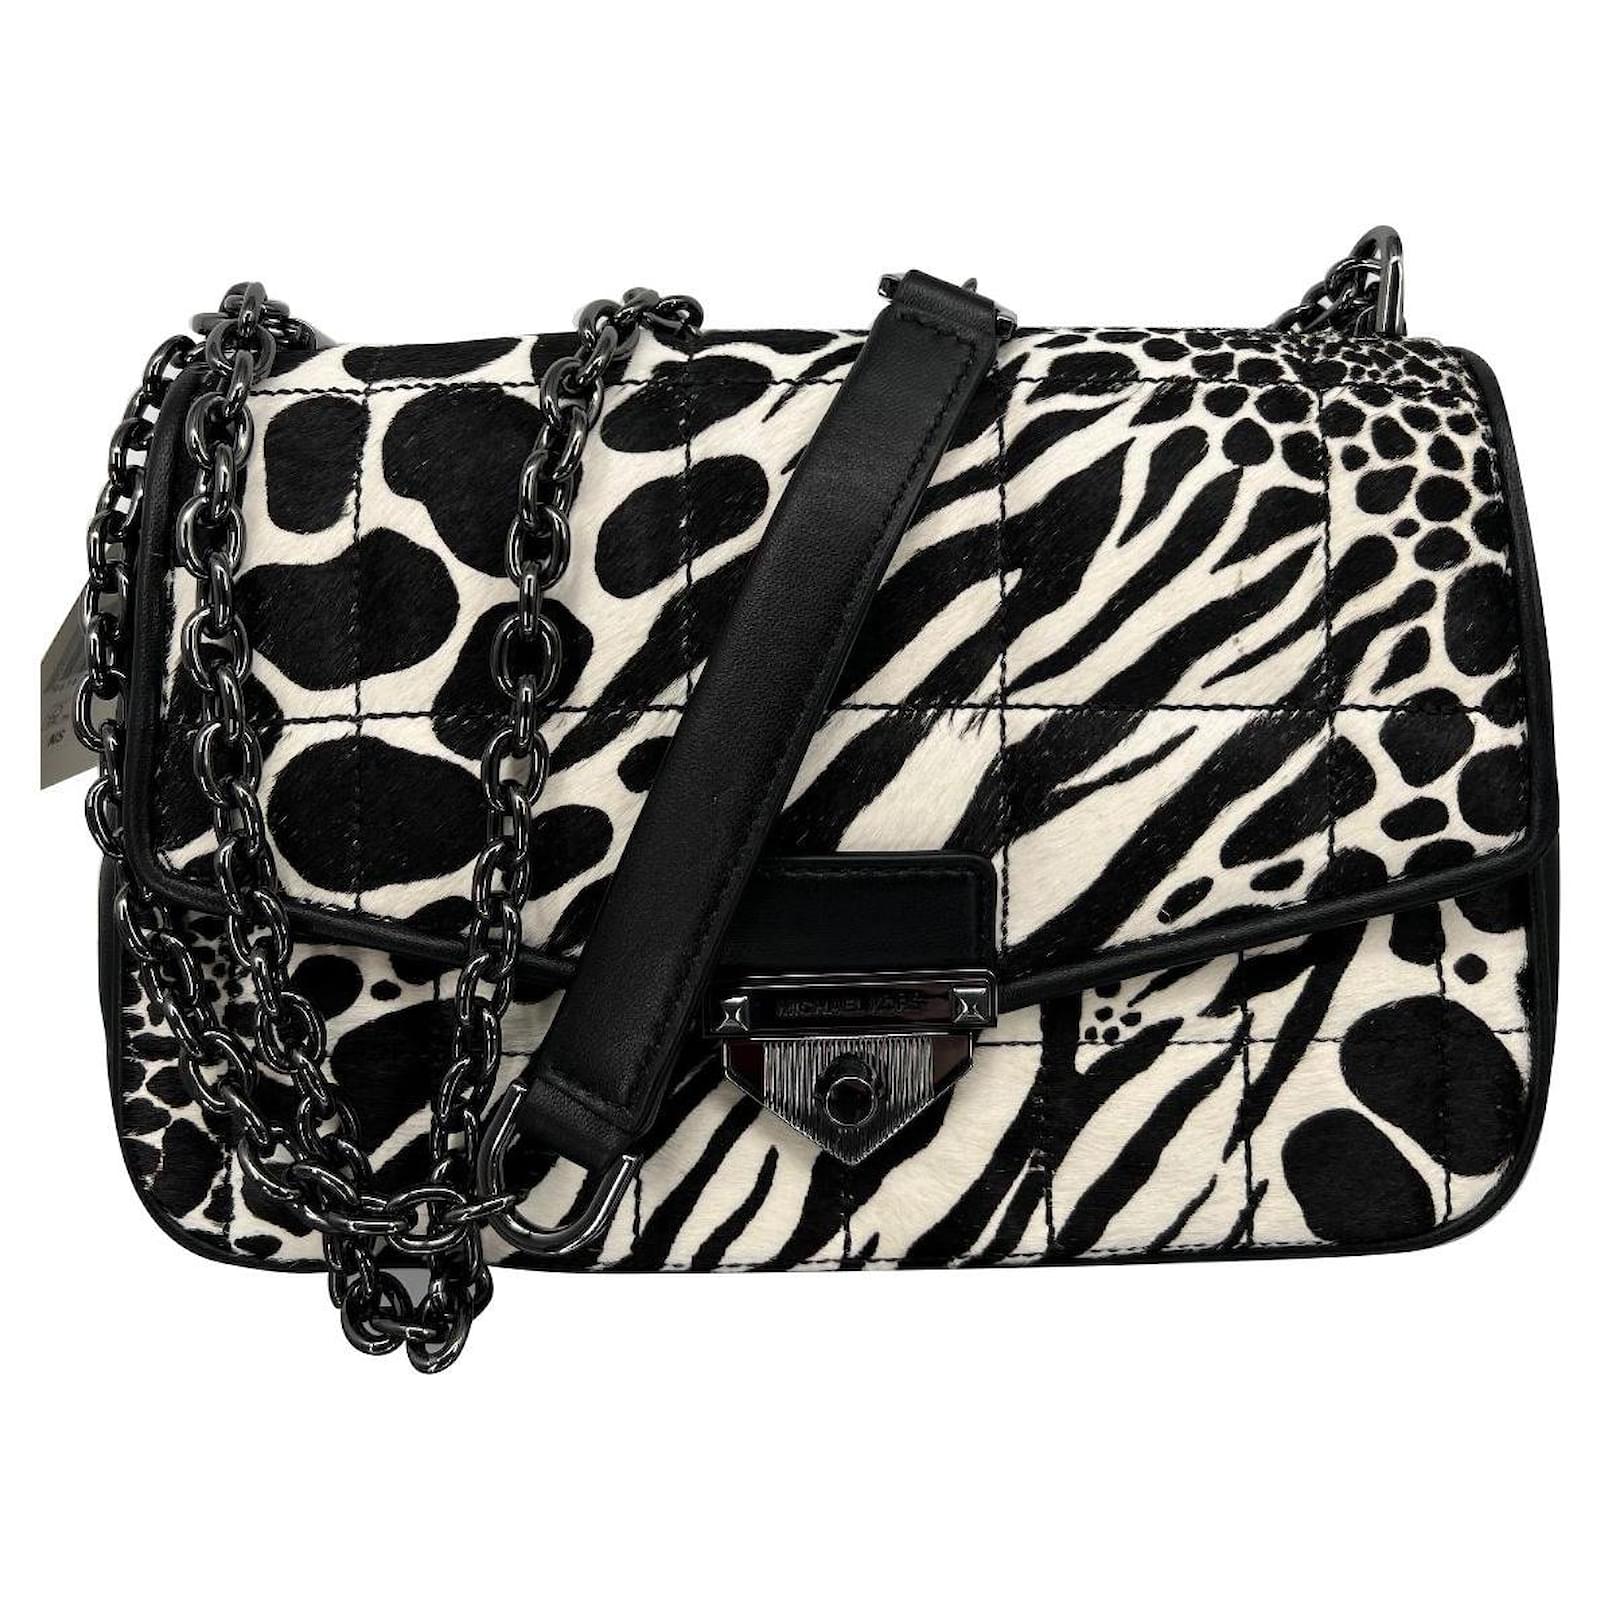 Michael Kors Animal Print Handbags Clearance  wwwkalyanamalemcom  1690427655